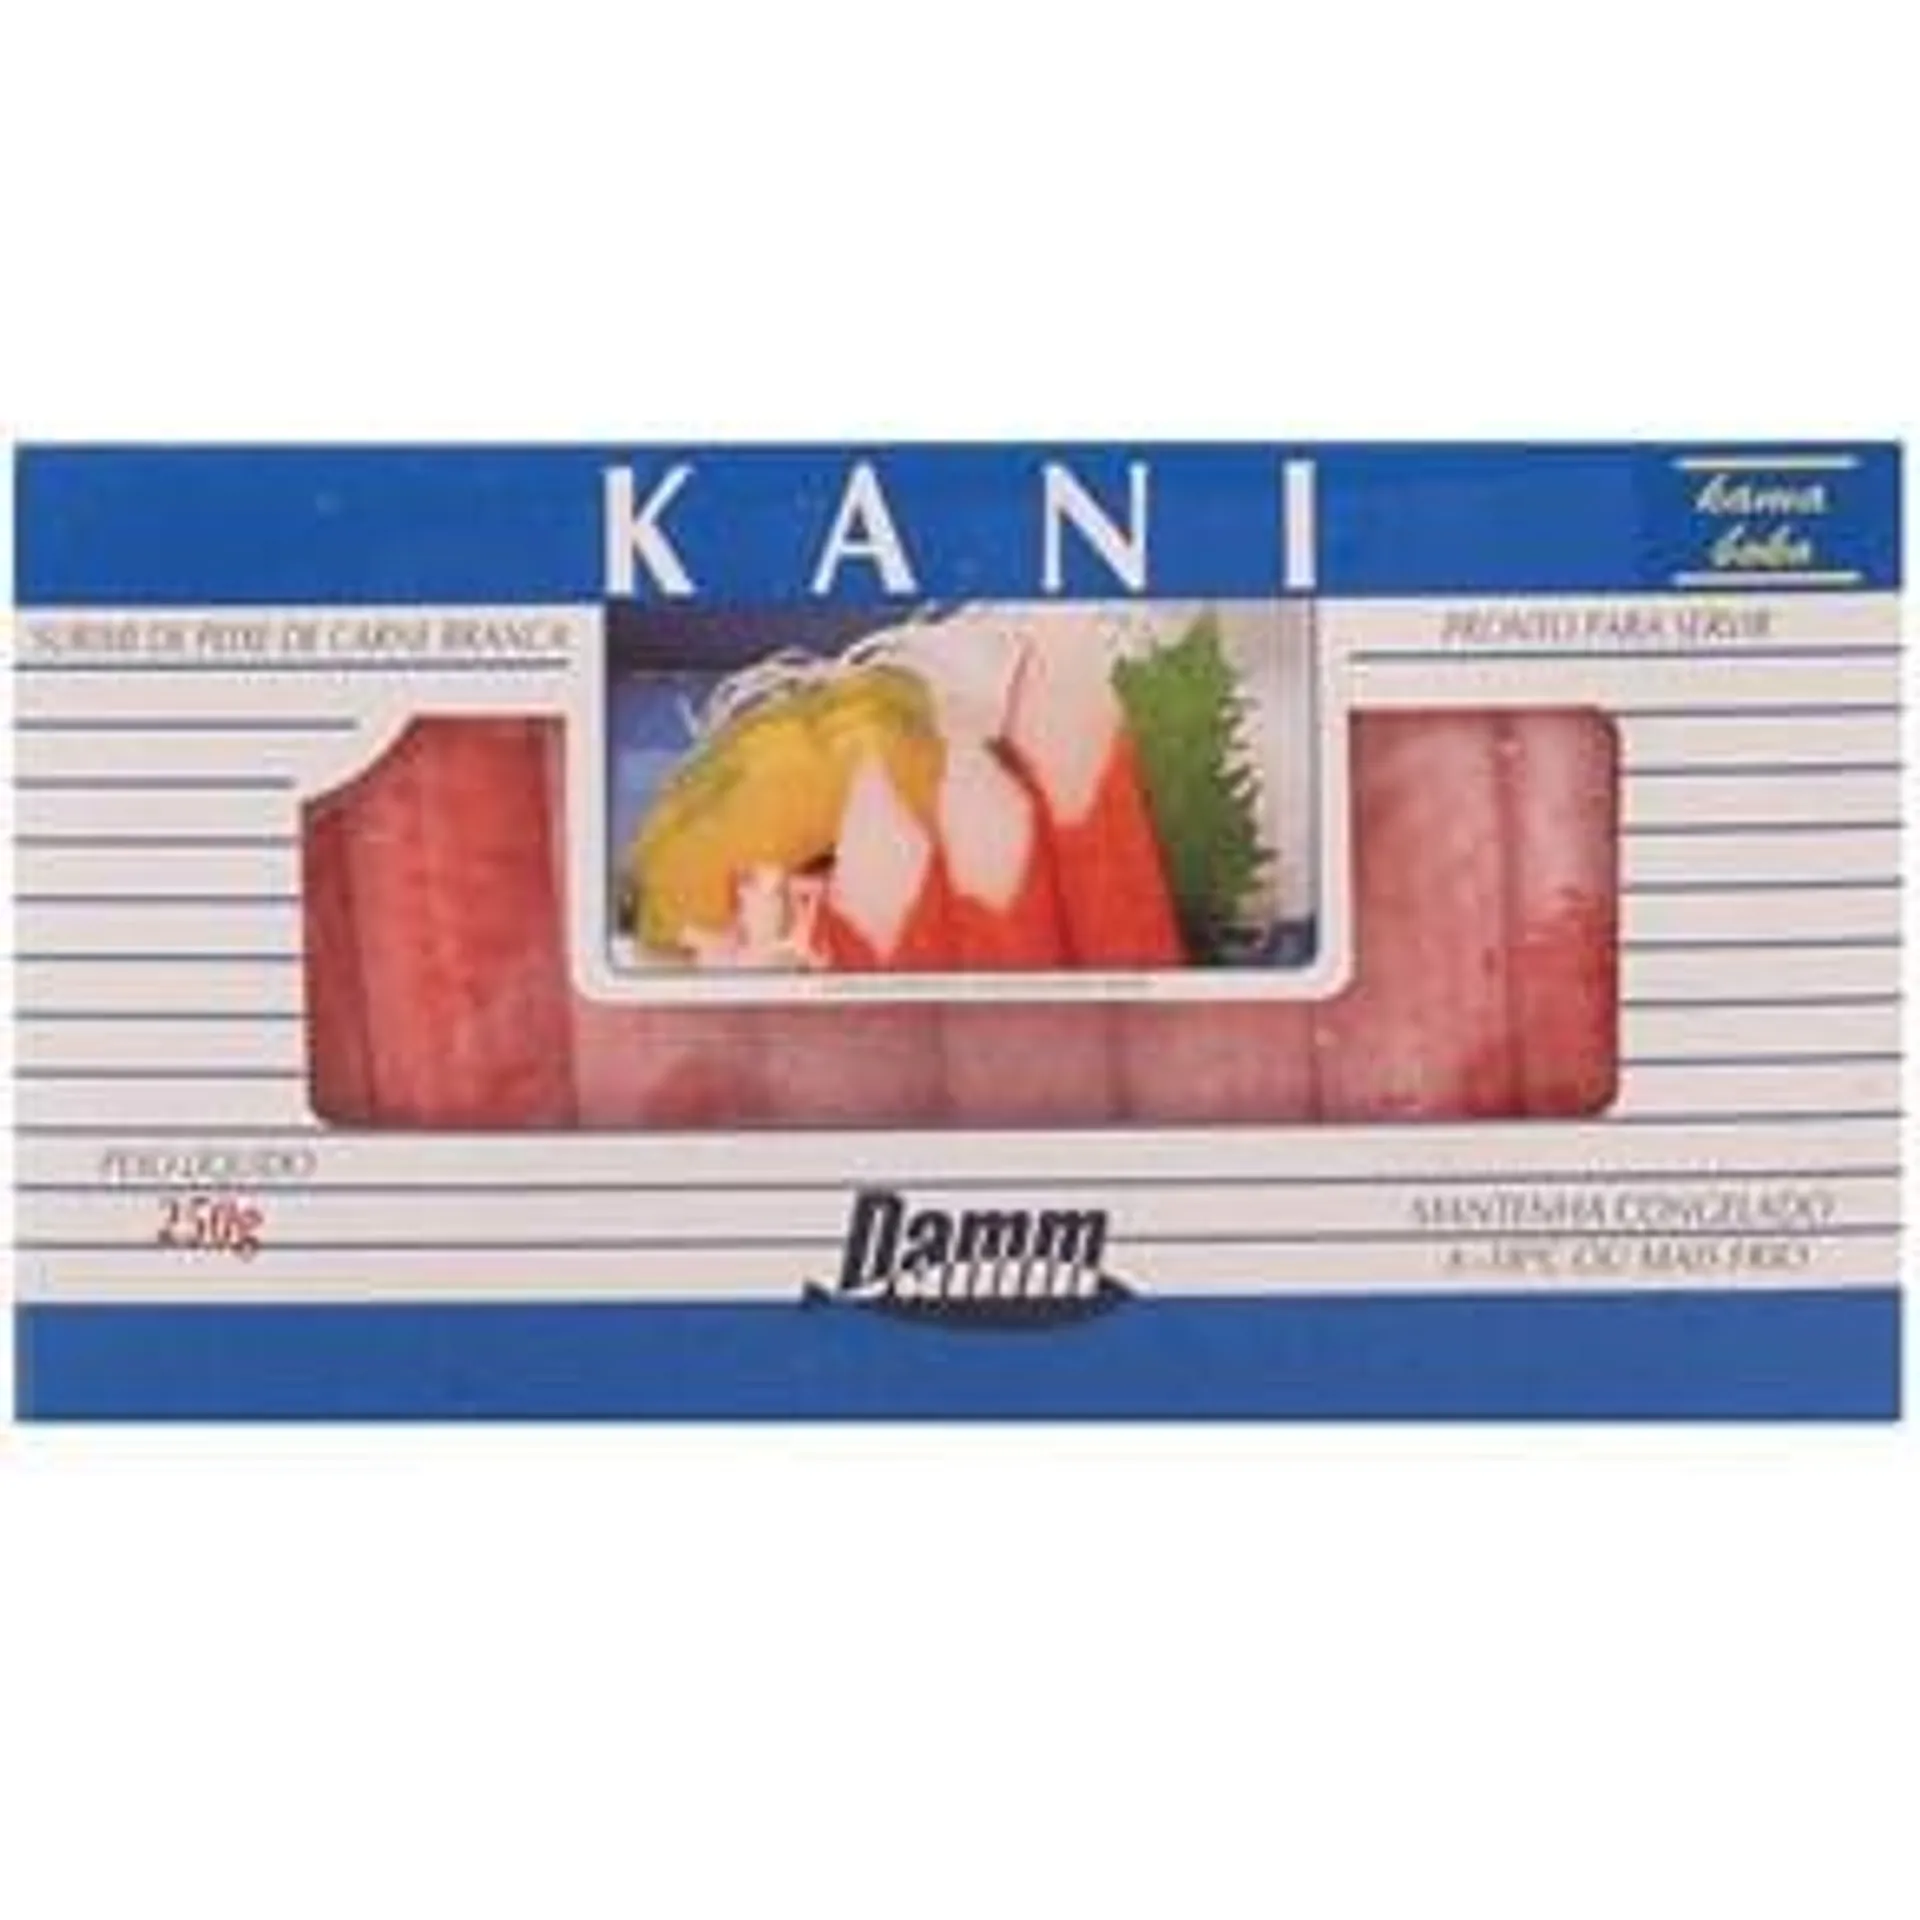 Kani Kama Tradicional Damm Pacote 250g